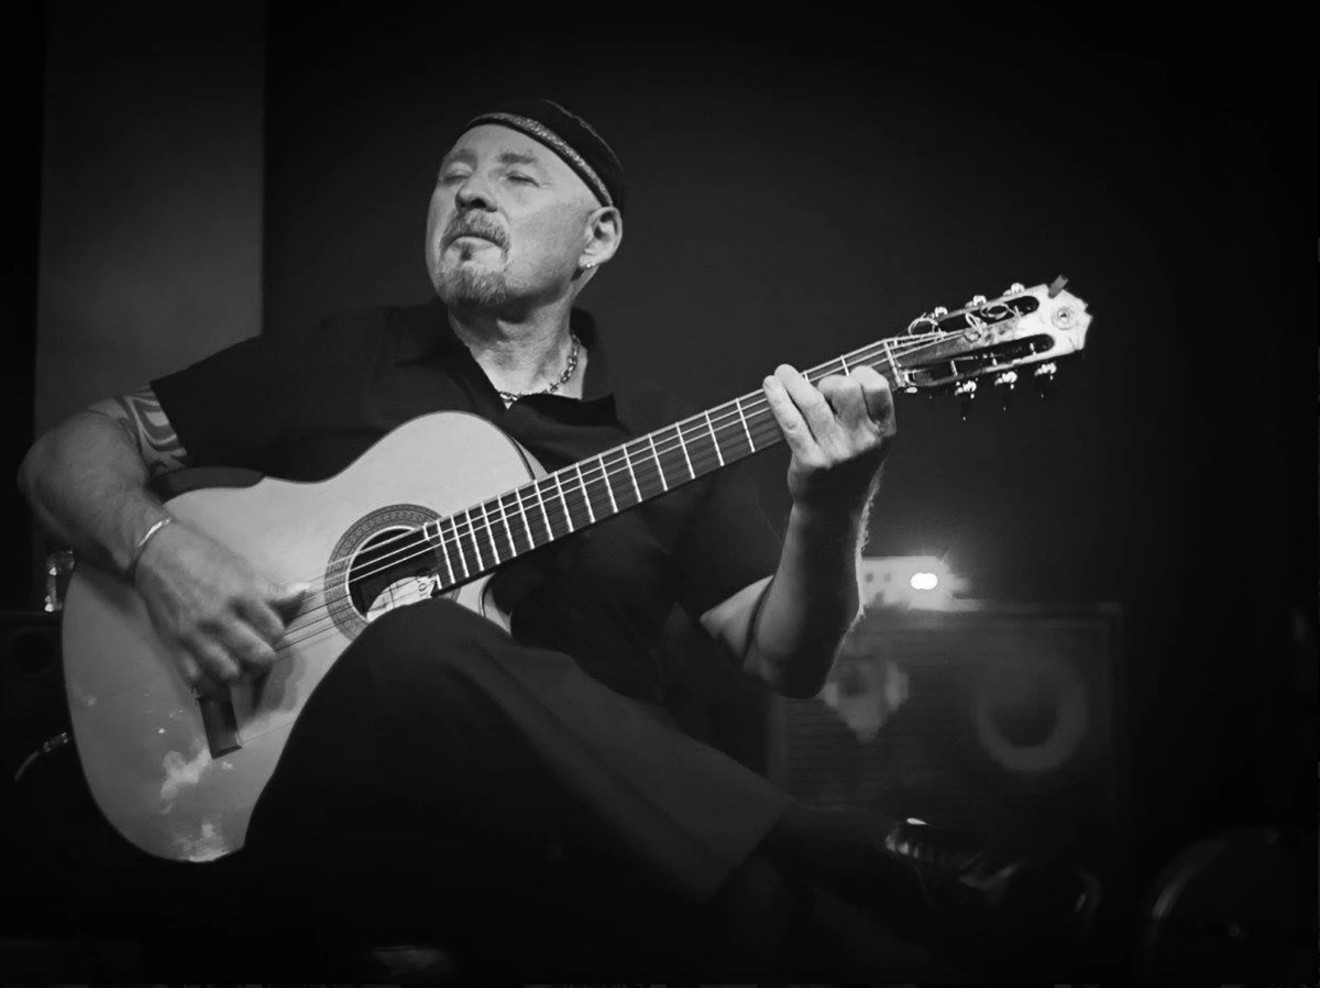 Miguel Espinoza fuses jazz and flamenco music.